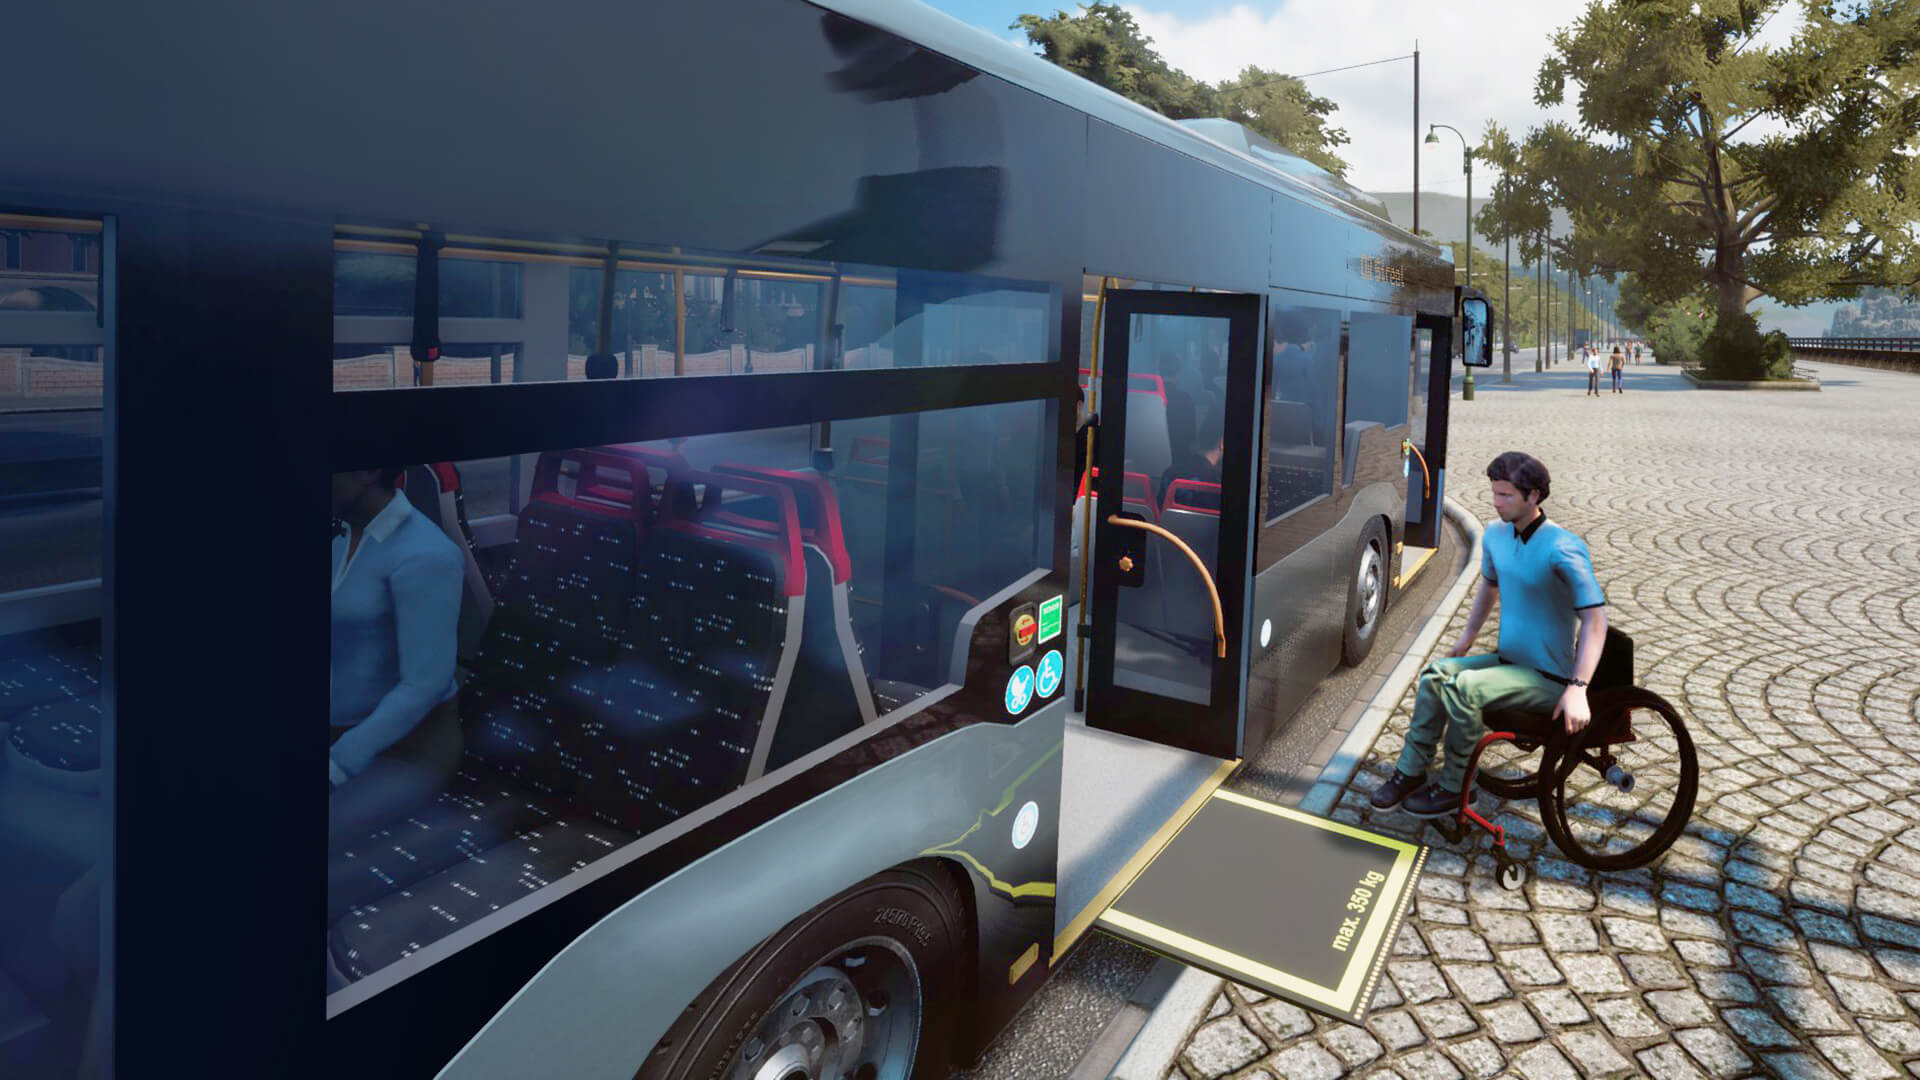 bus simulator 18 money mod